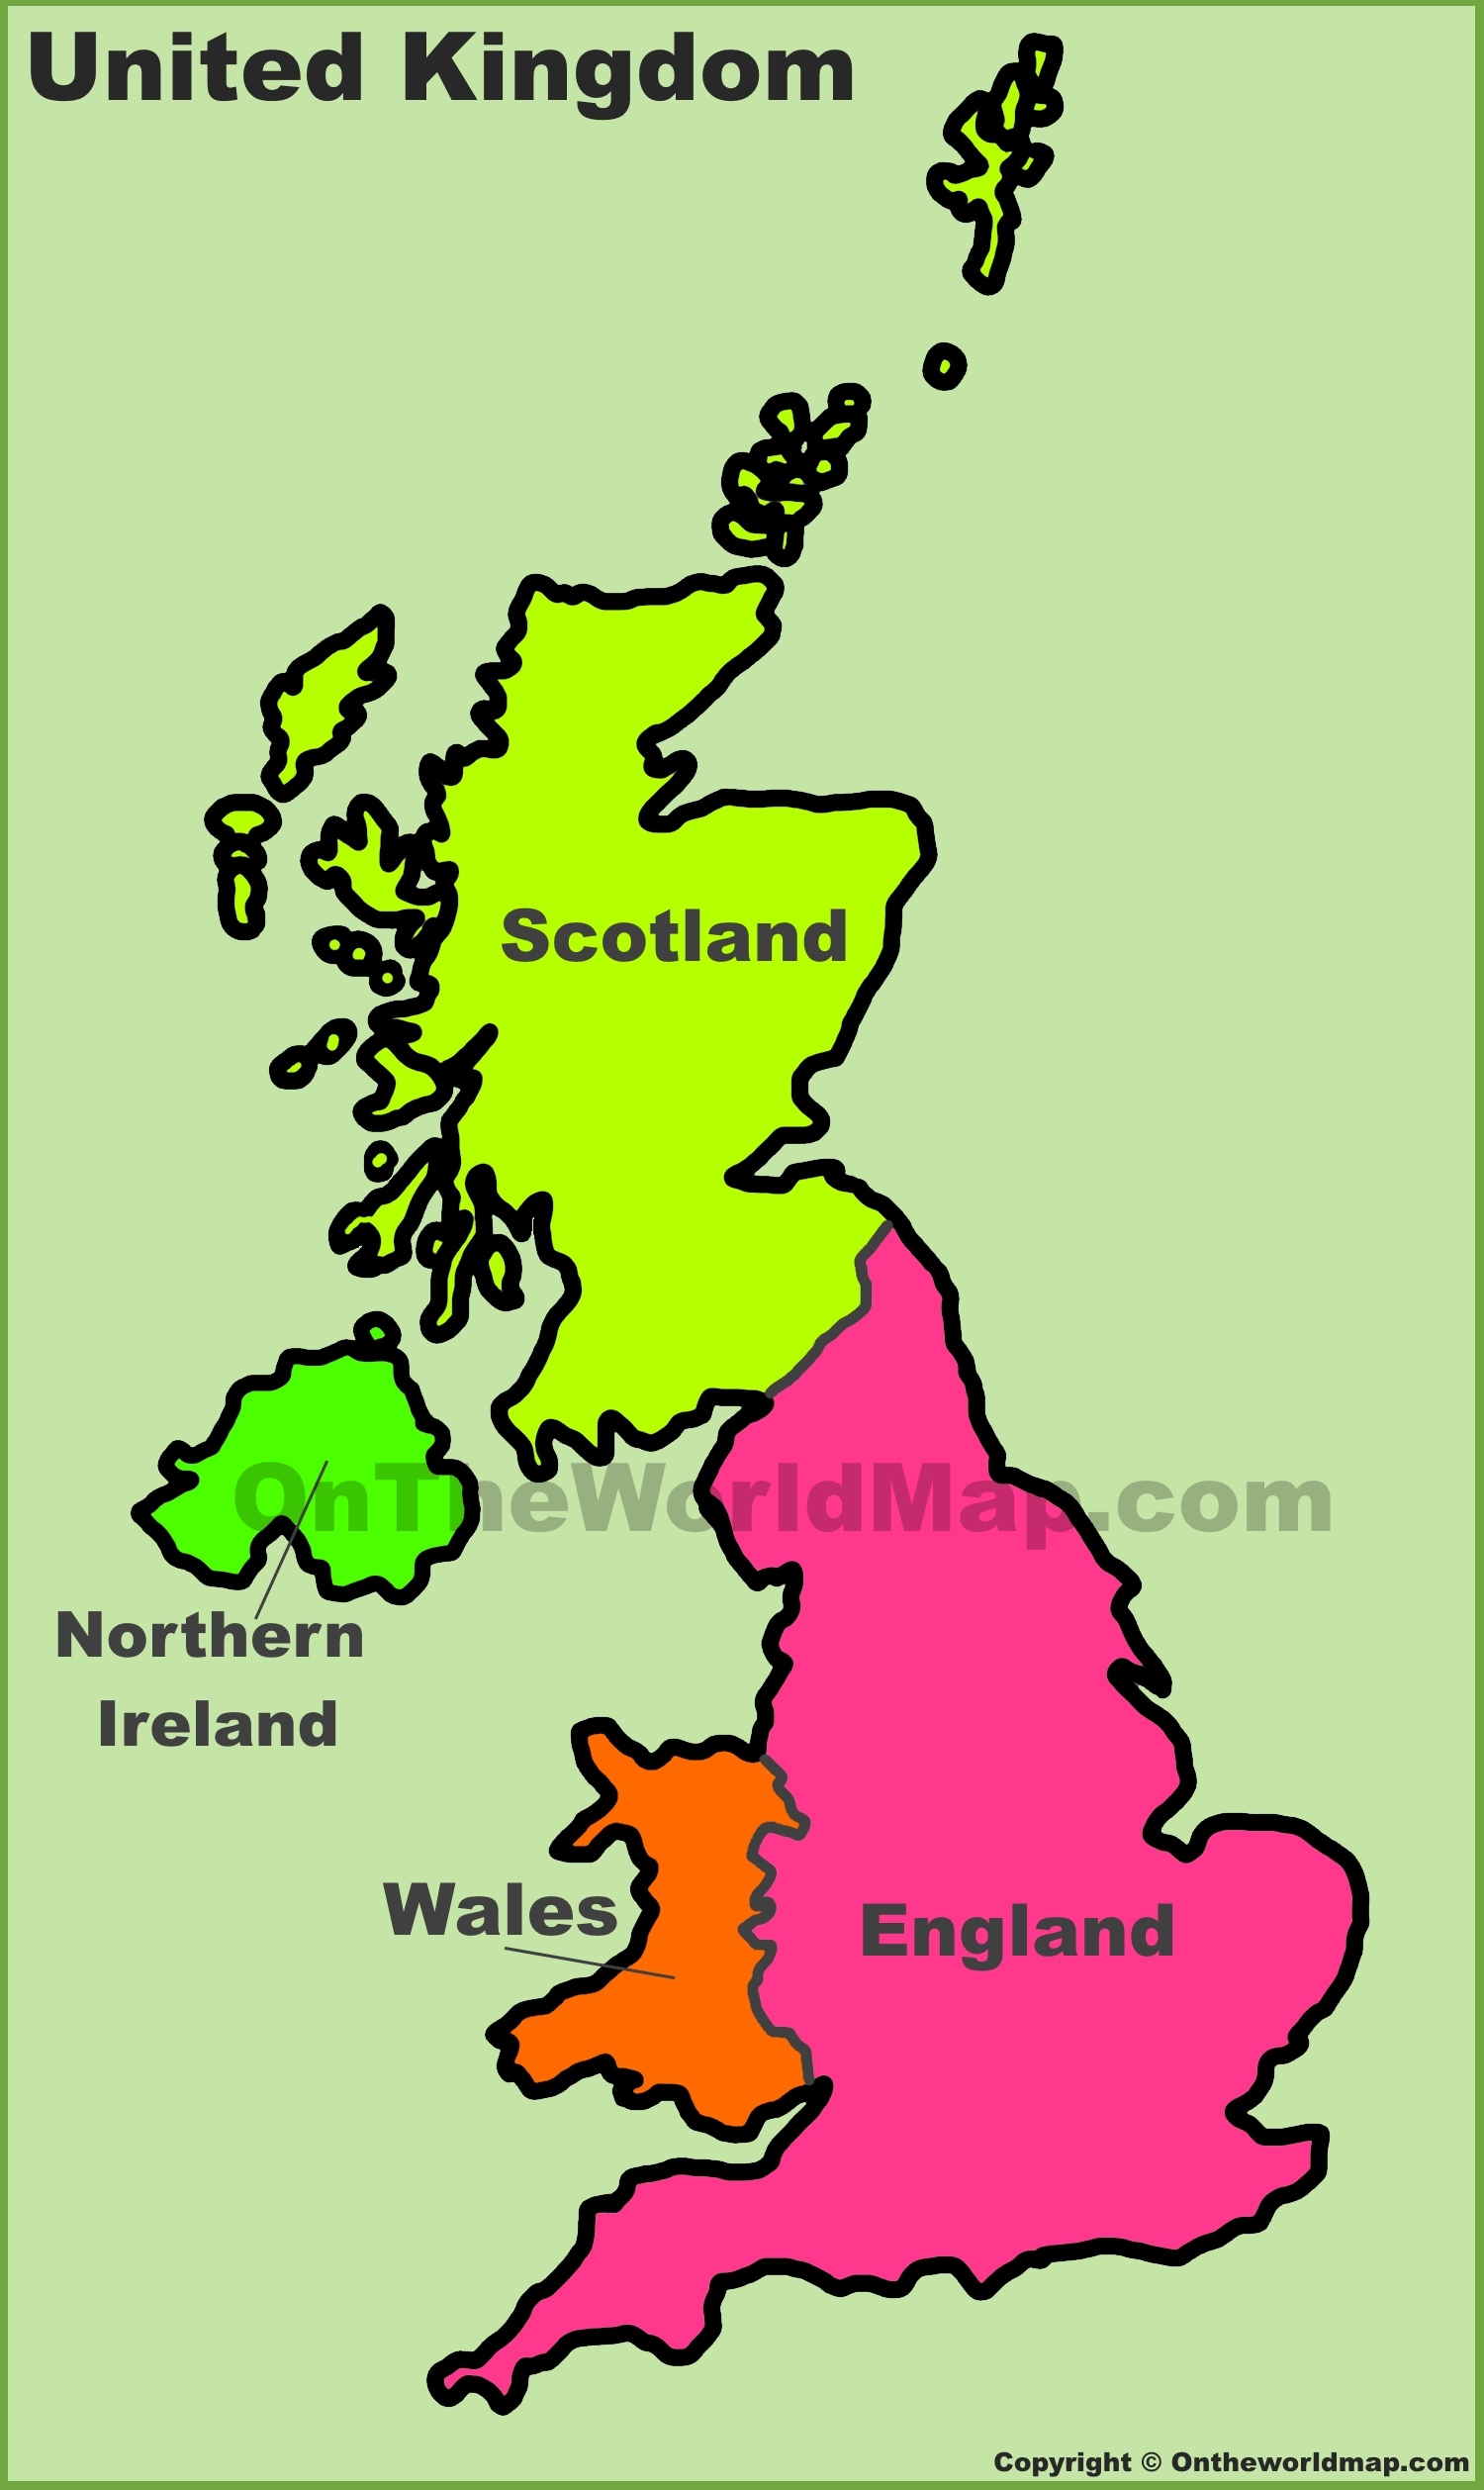 UK countries map